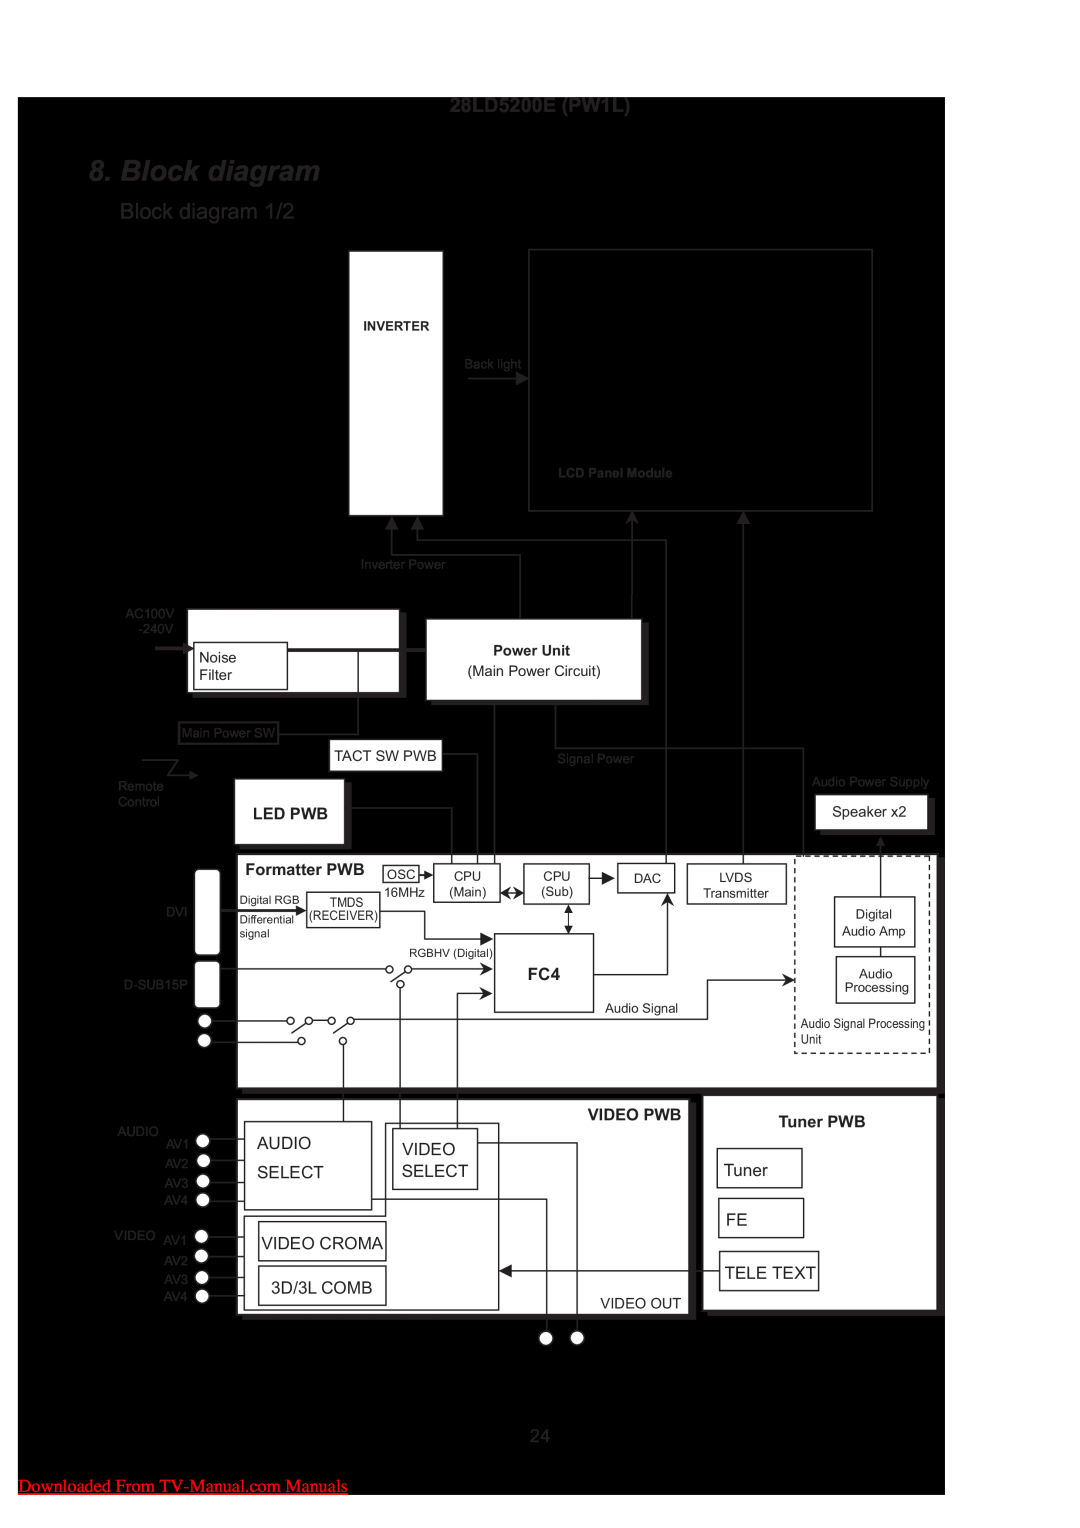 Hitachi Block diagram 1/2, 28LD5200E PW1L, Downloaded From TV-Manual.com Manuals, Led Pwb, Formatter PWB, Video Pwb 